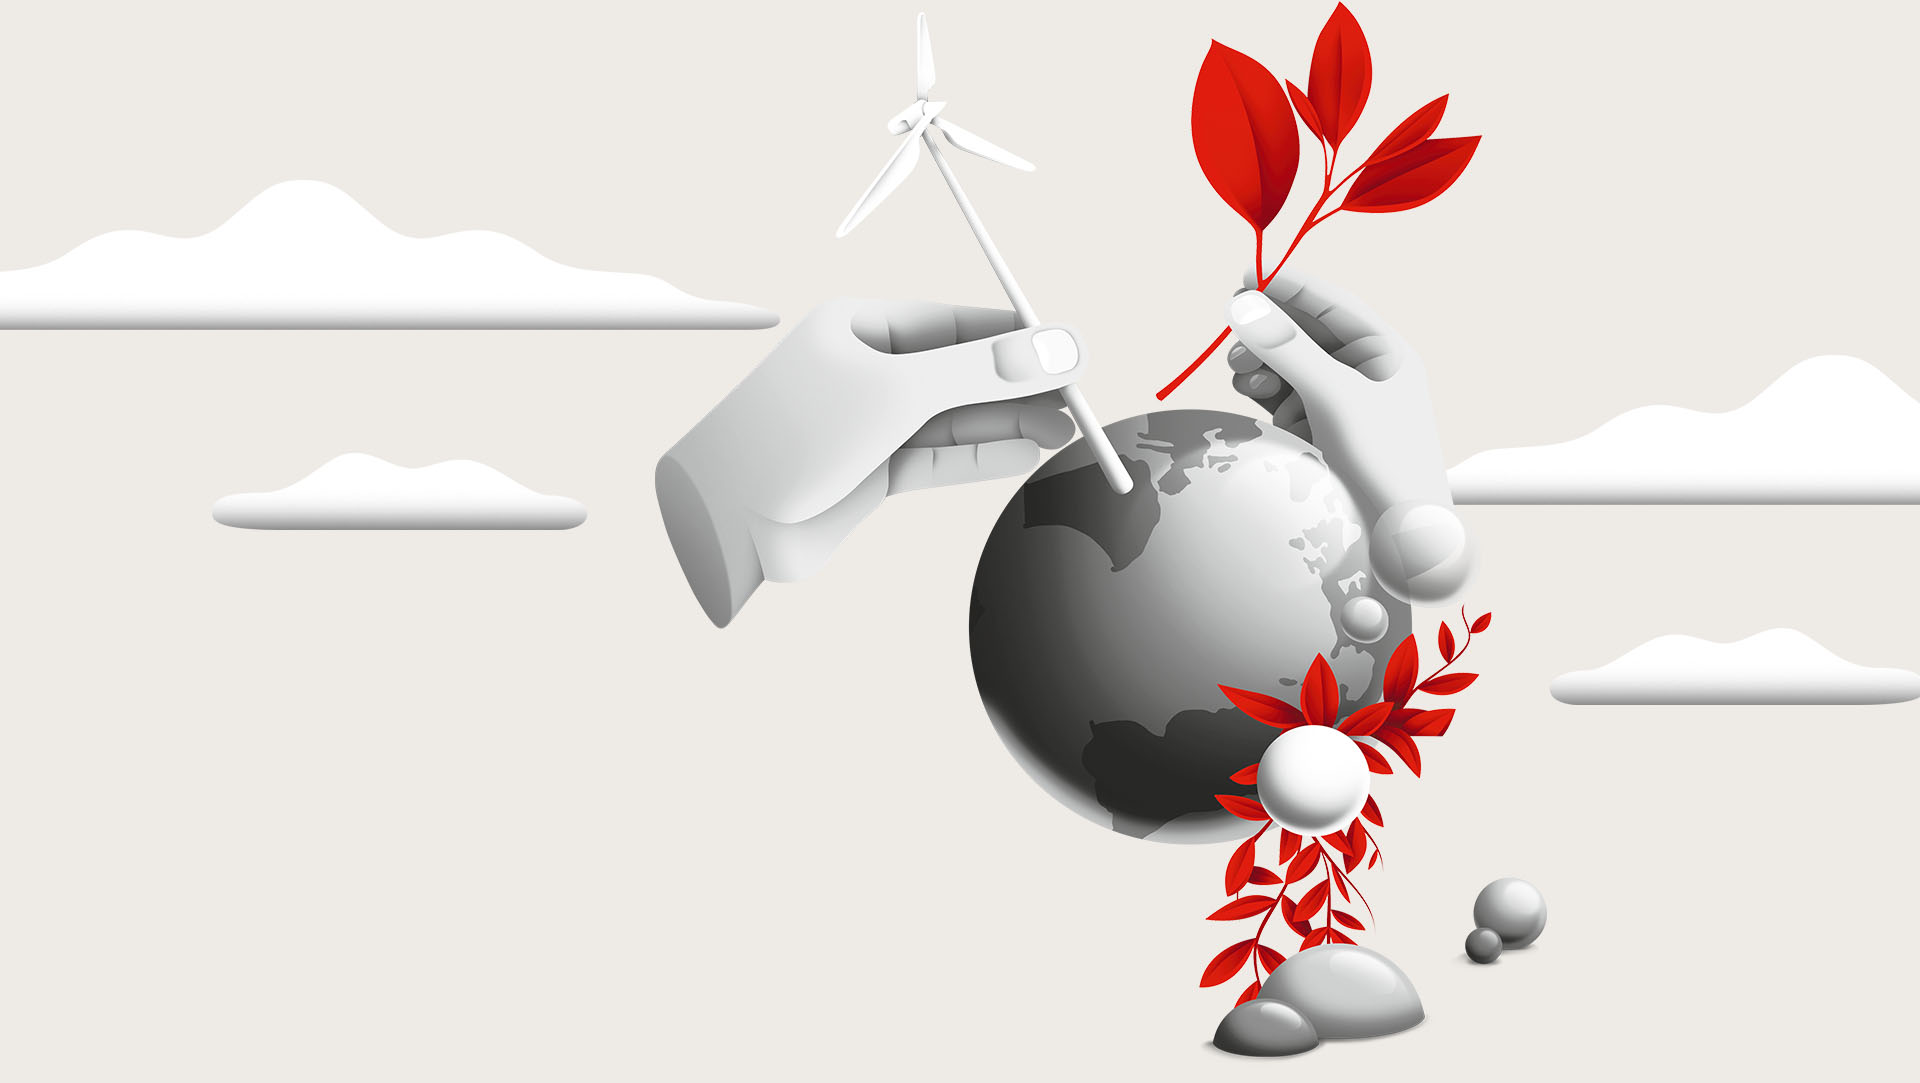 Globe, hands, branches and pinwheel - illustration (illustration)